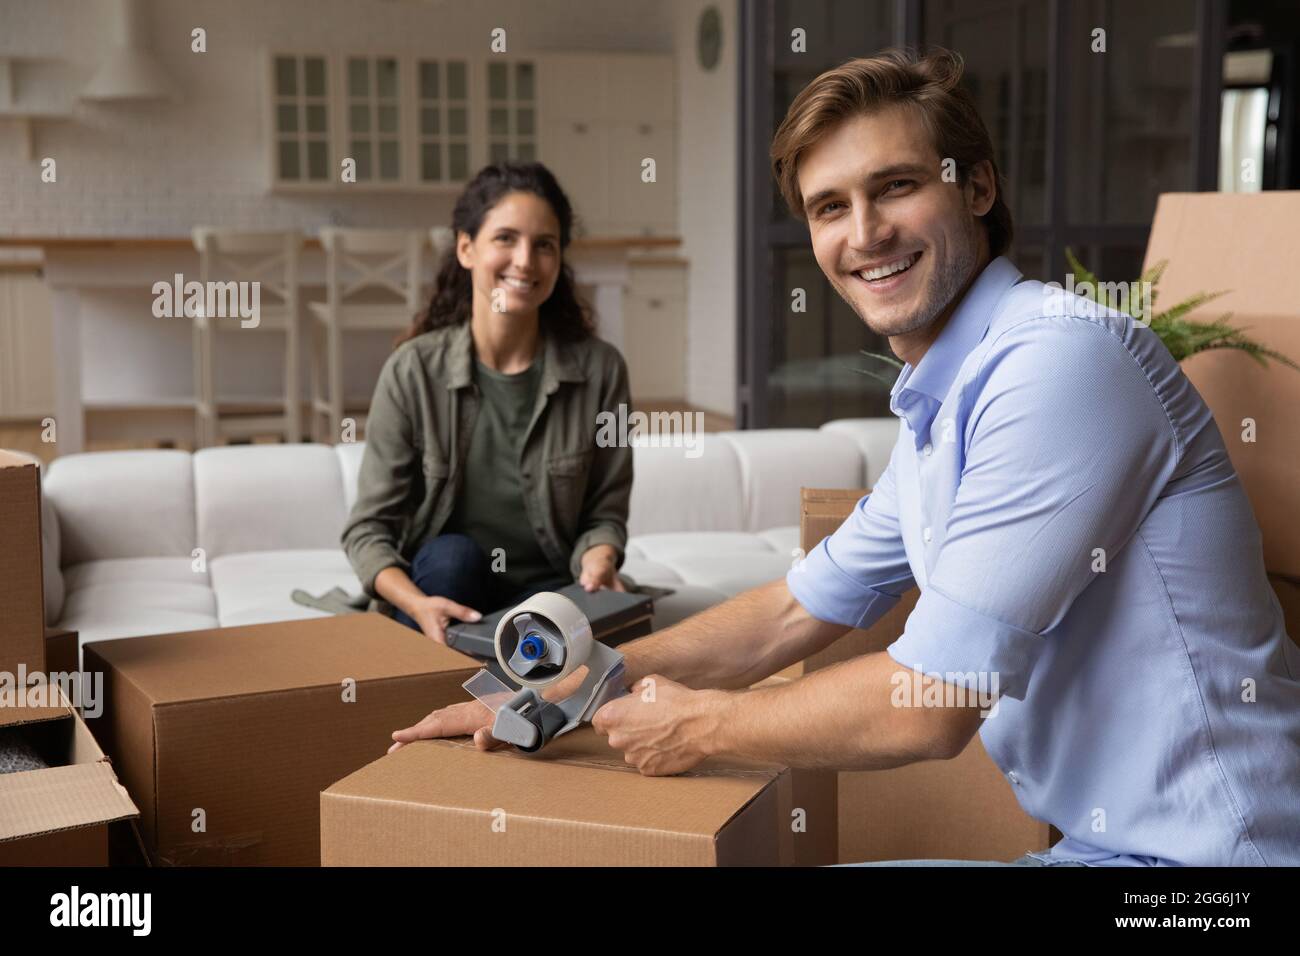 Lächelndes junges Familienpaar, das Sachen in riesige Pappkartons verpackt. Stockfoto